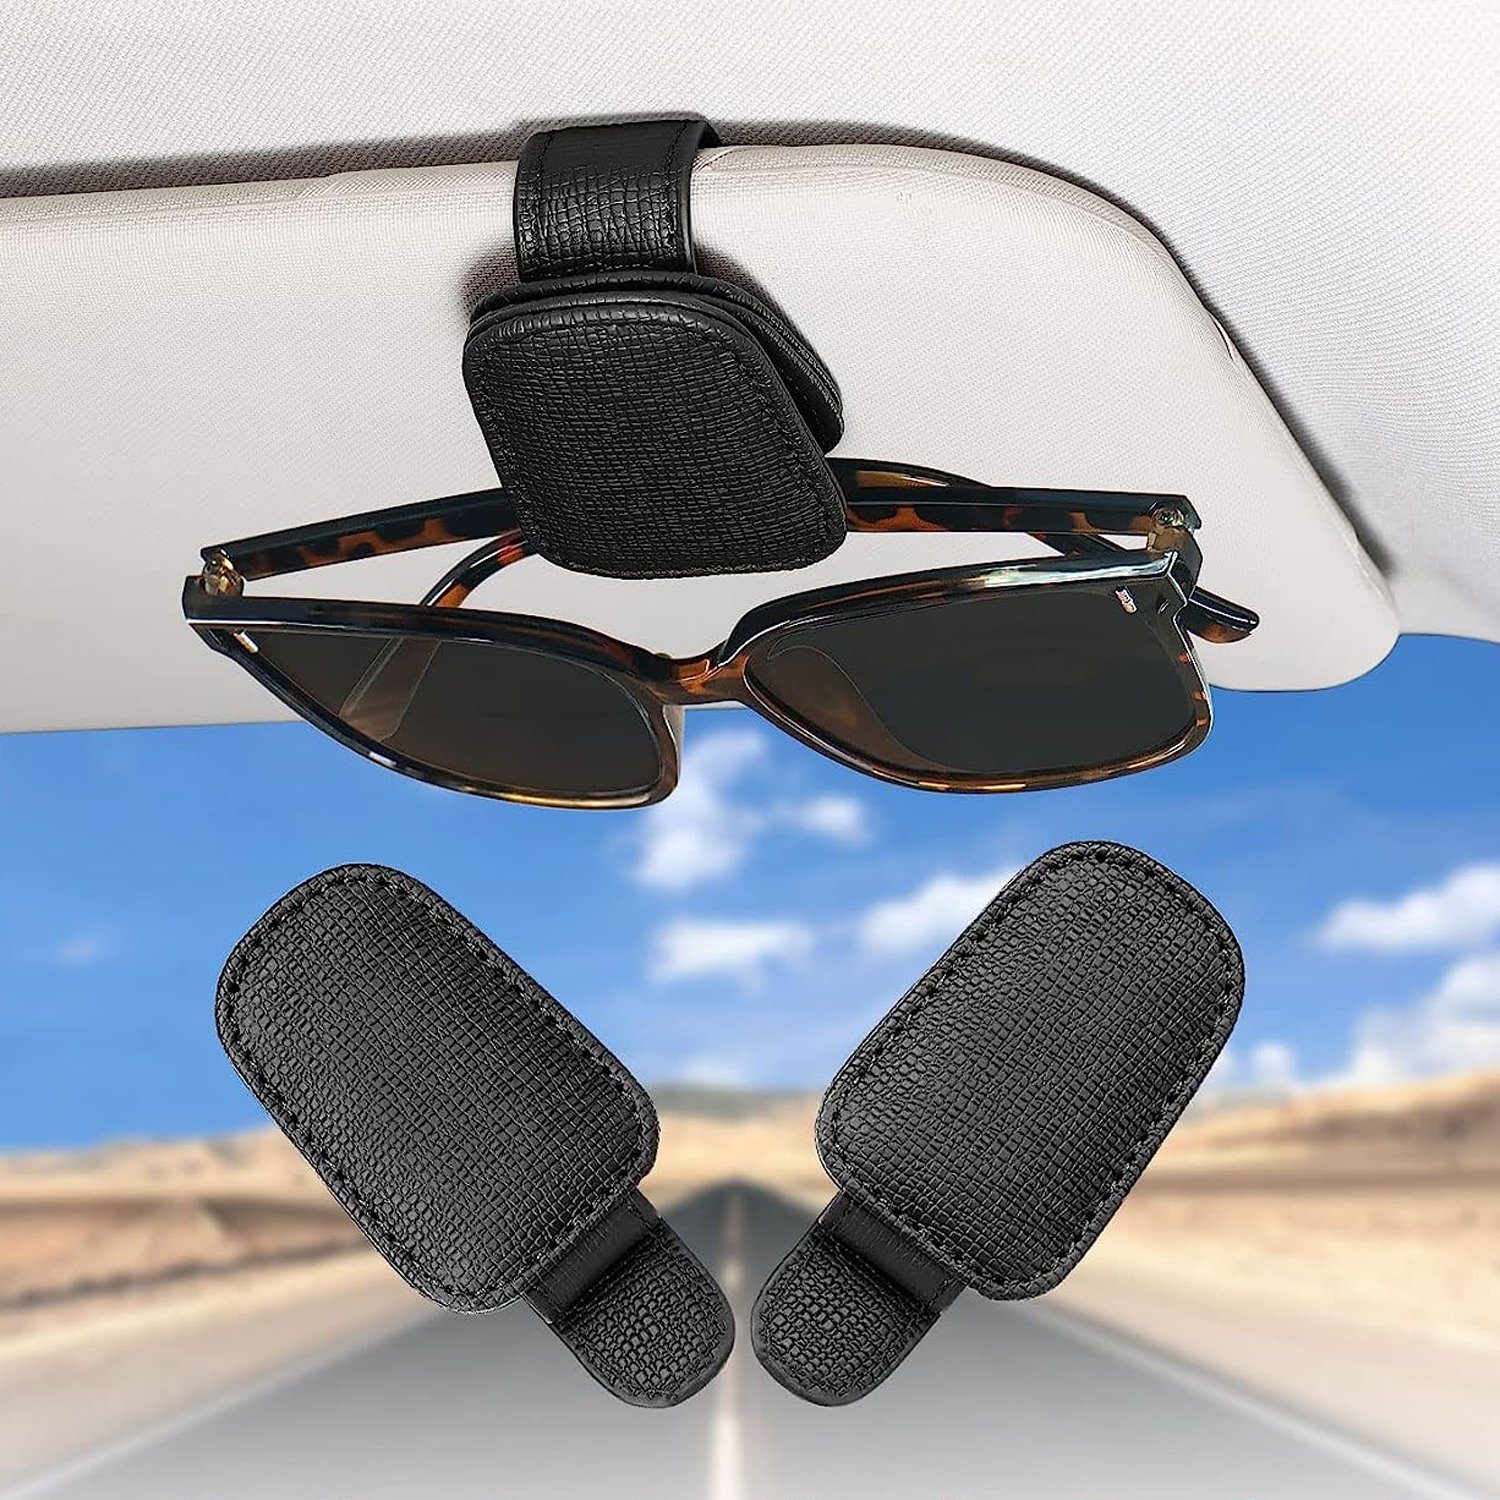 NUODWELL Autosonnenschutz 2 Pack Brillenhalter Auto Sonnenblende, Visier Sonnenbrillenhalterung Schwarz